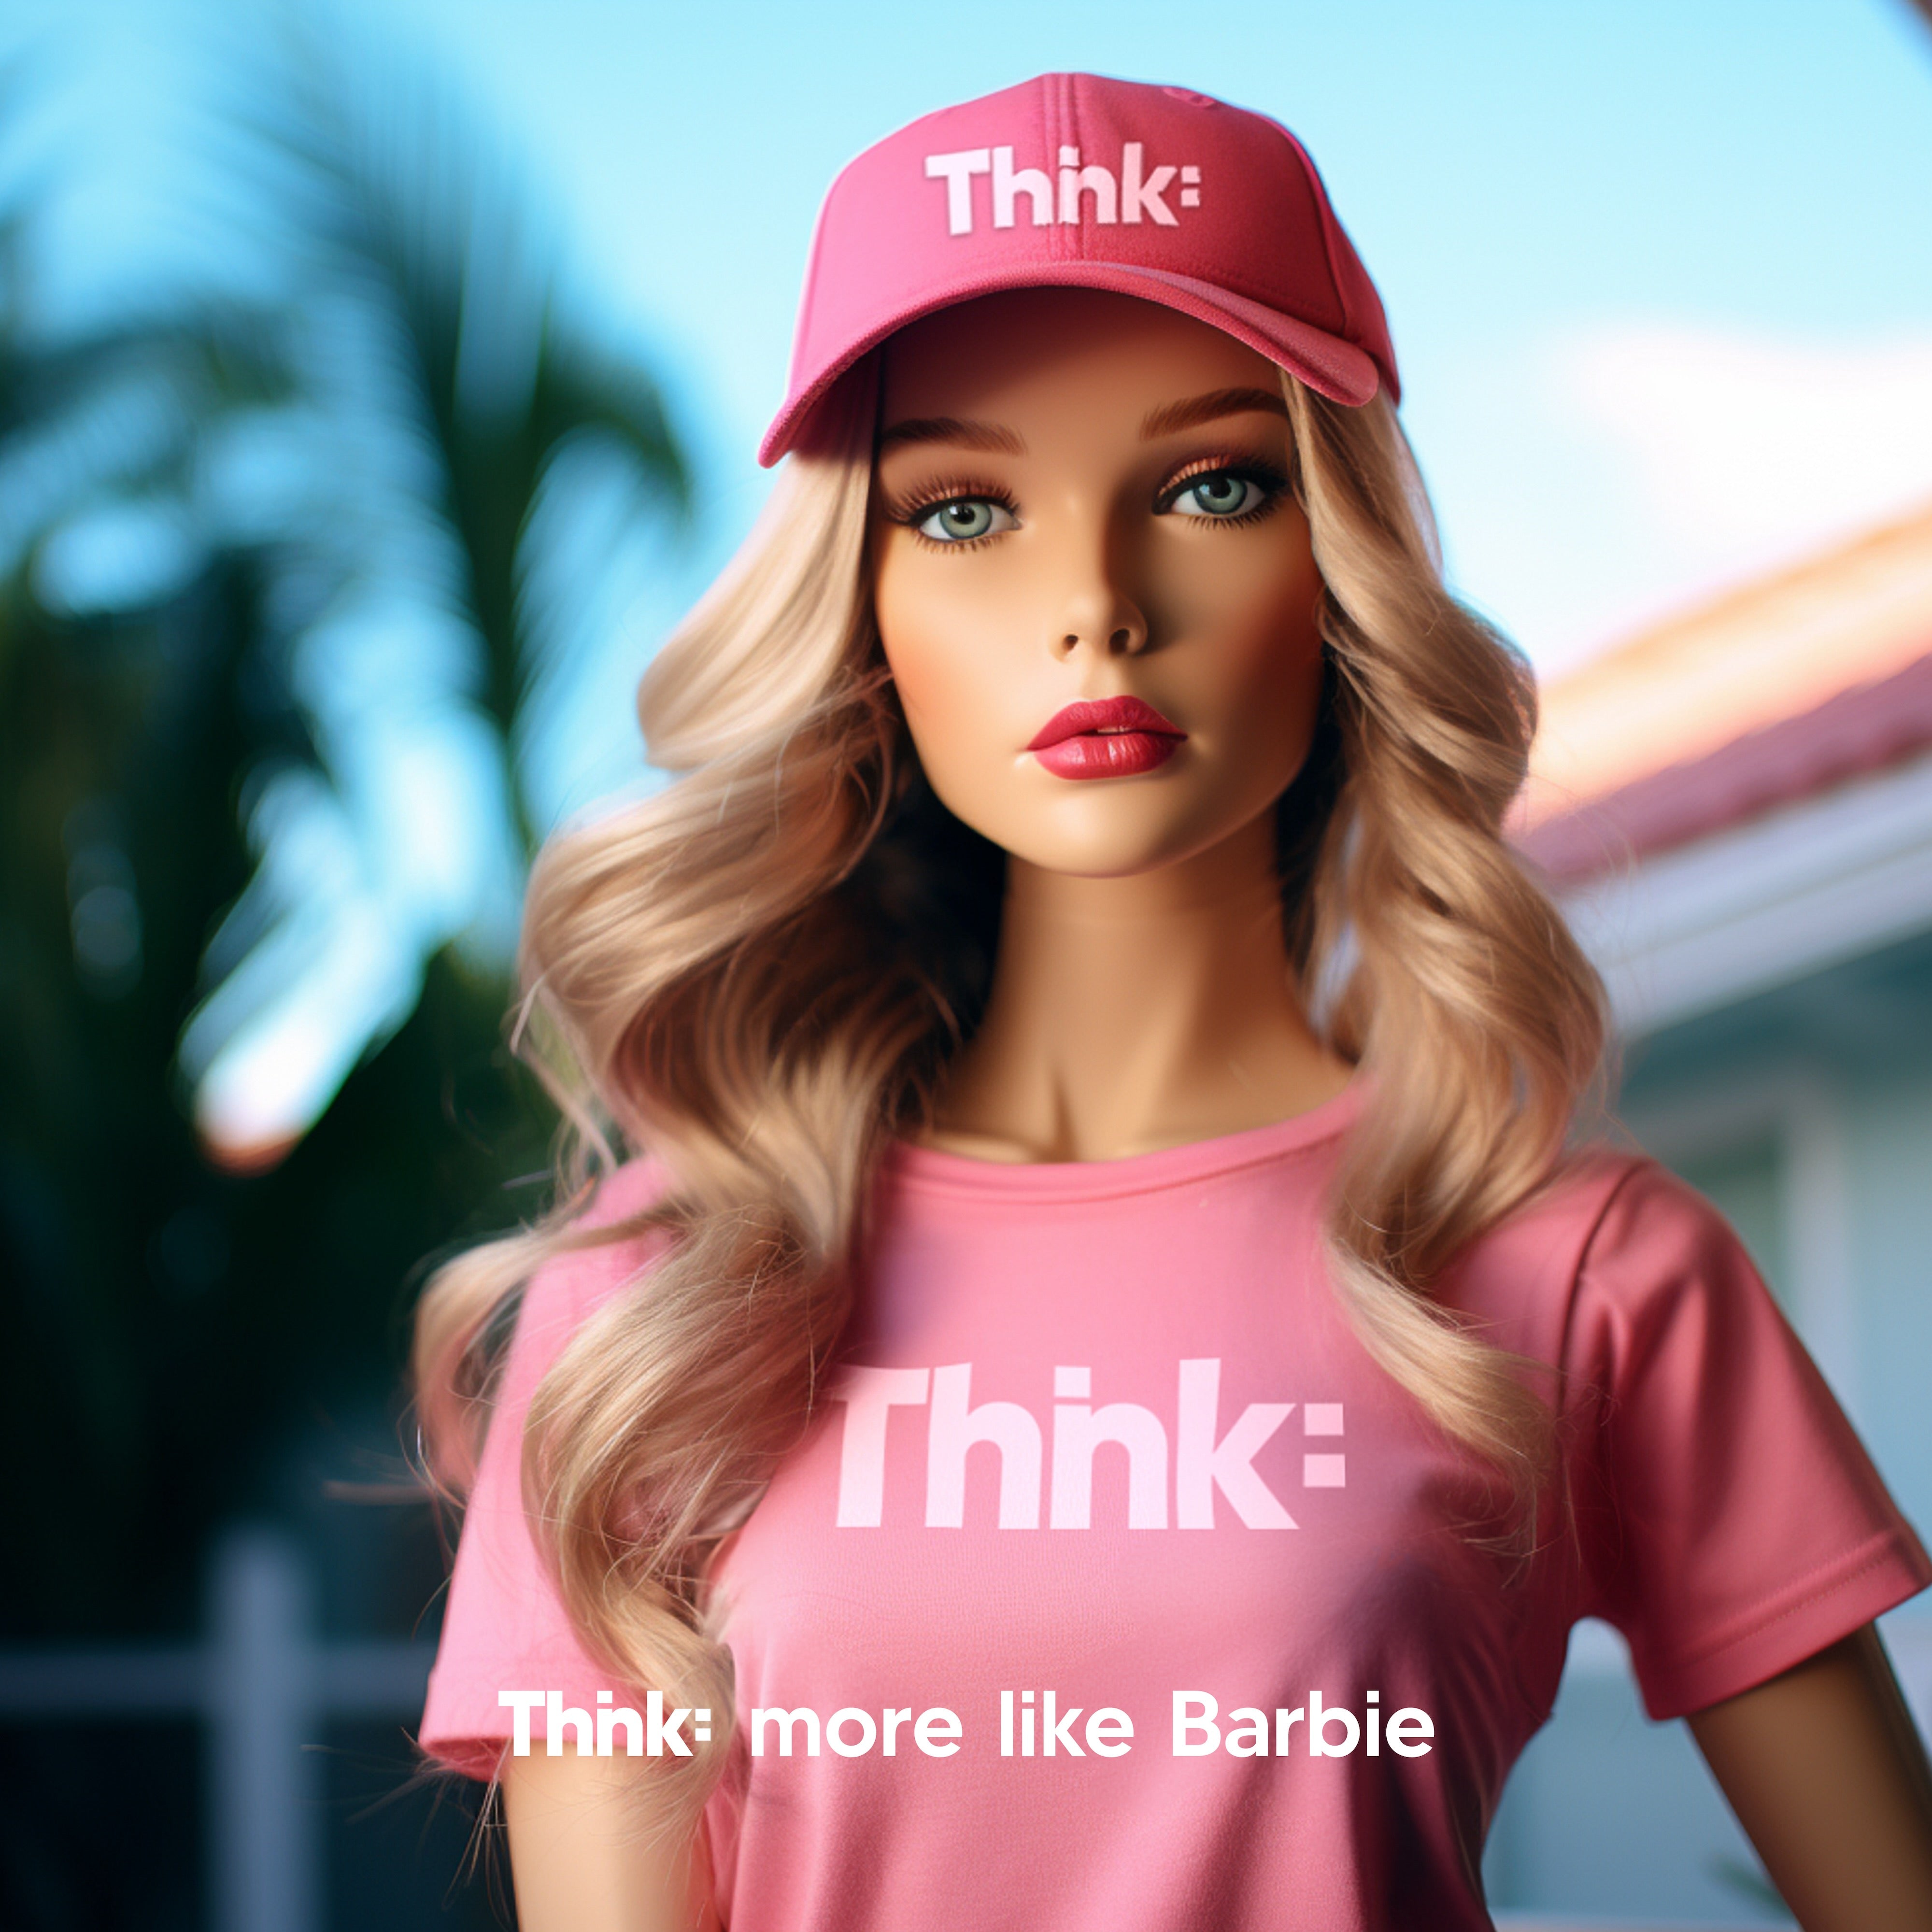 Thnk: More Like Barbie